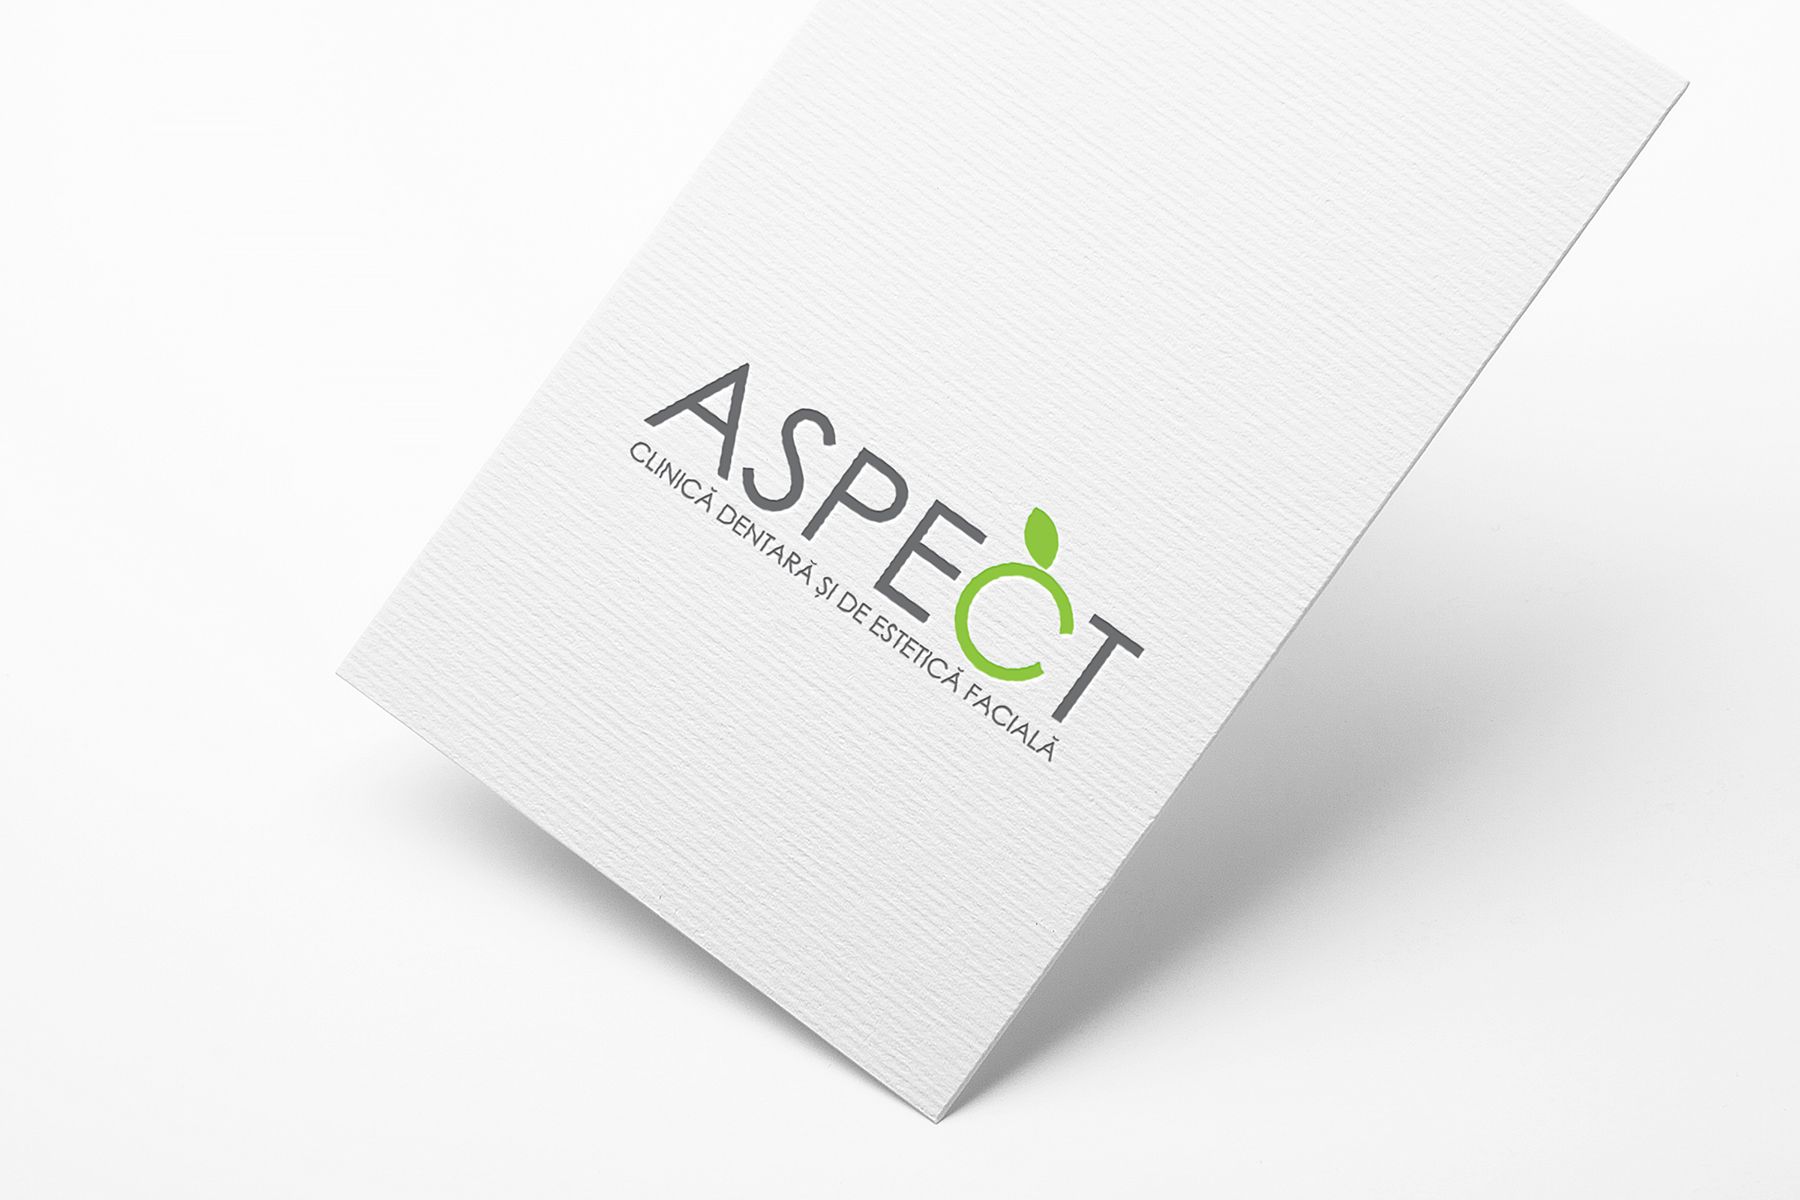 Aspect logo